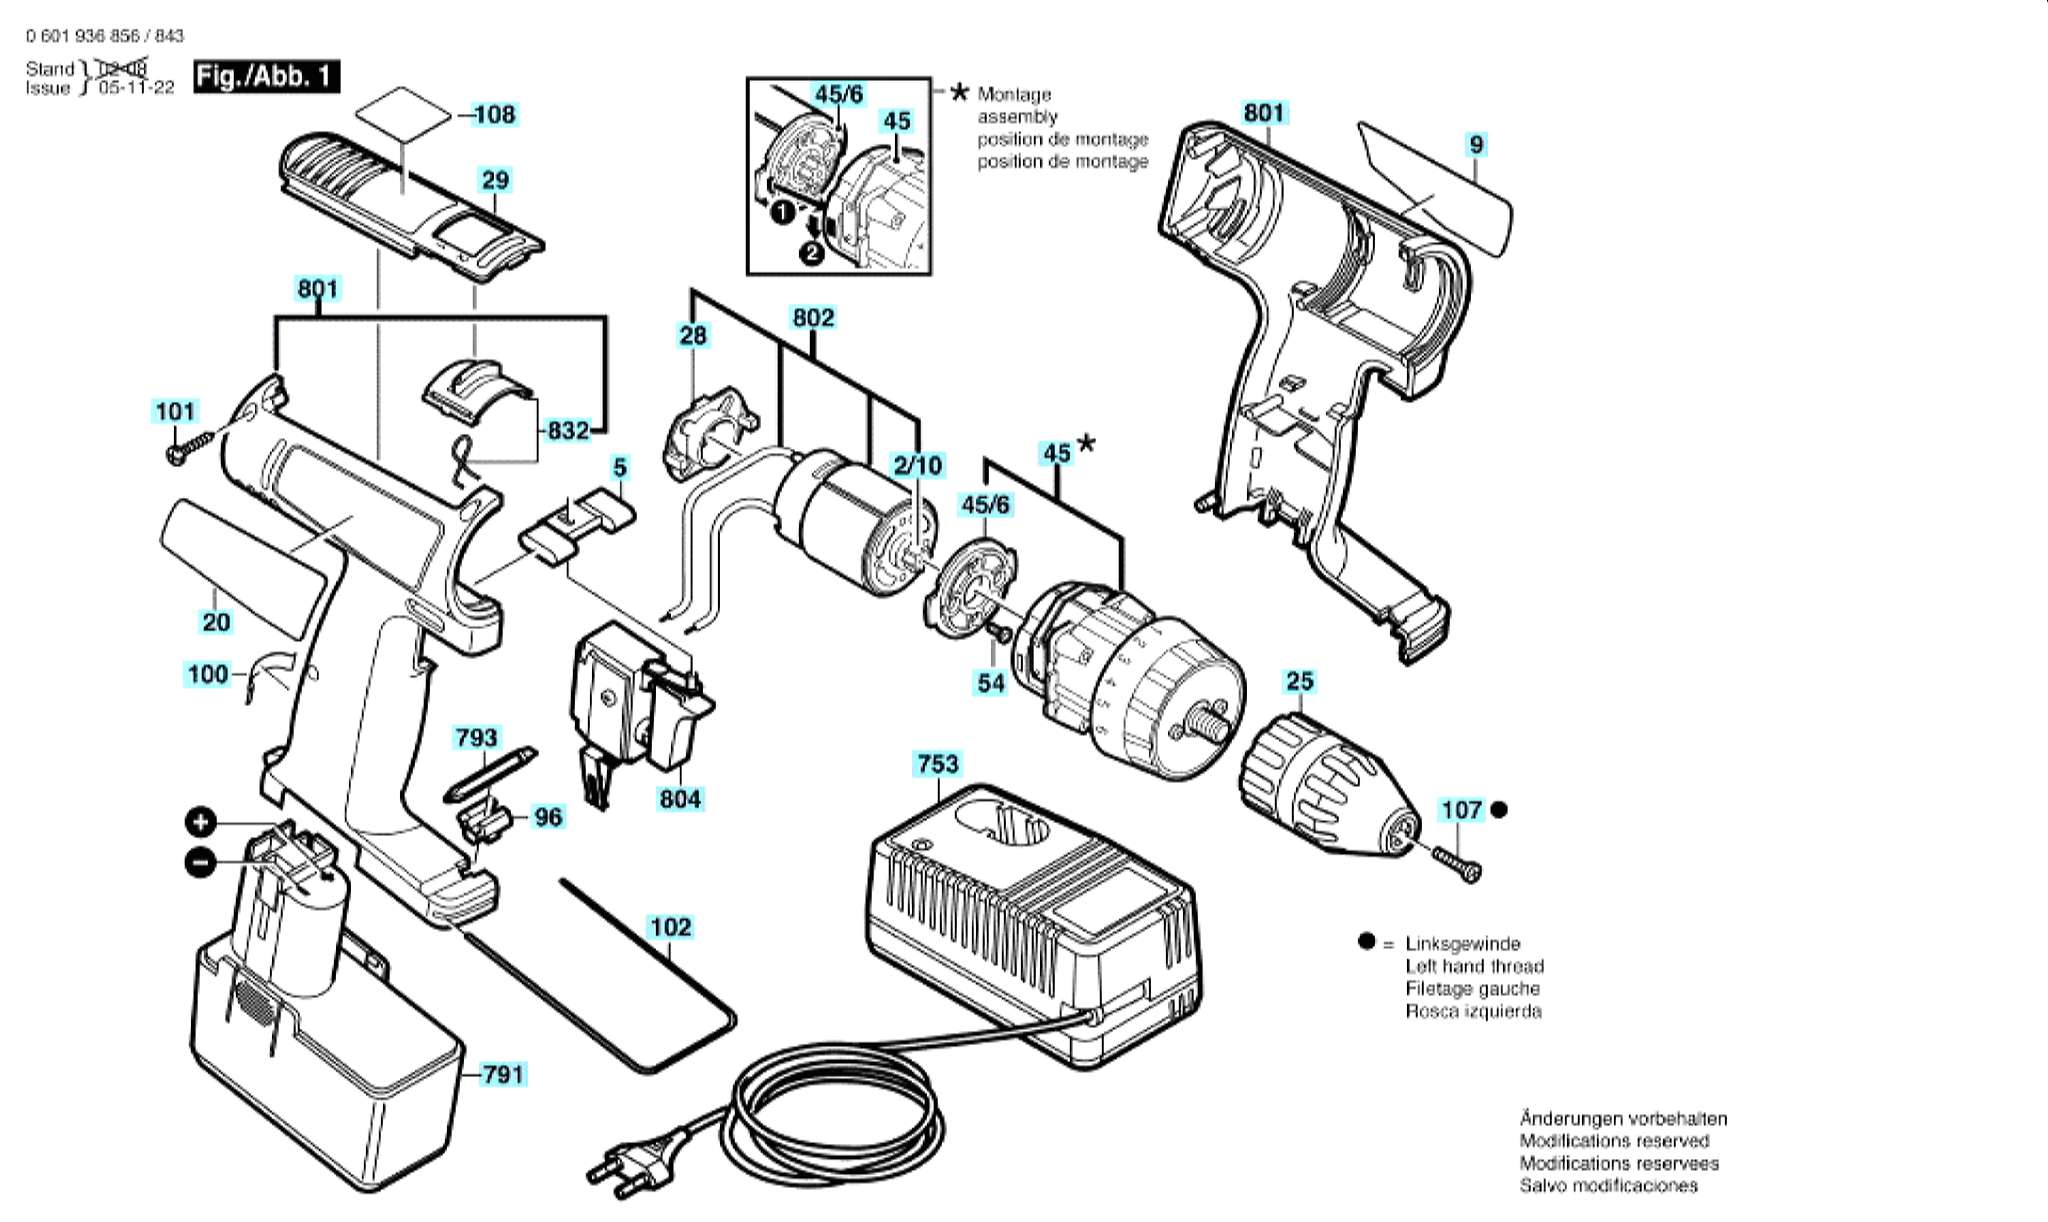 Запчасти, схема и деталировка Bosch GSR 12 VSH-2 (ТИП 0601936856)